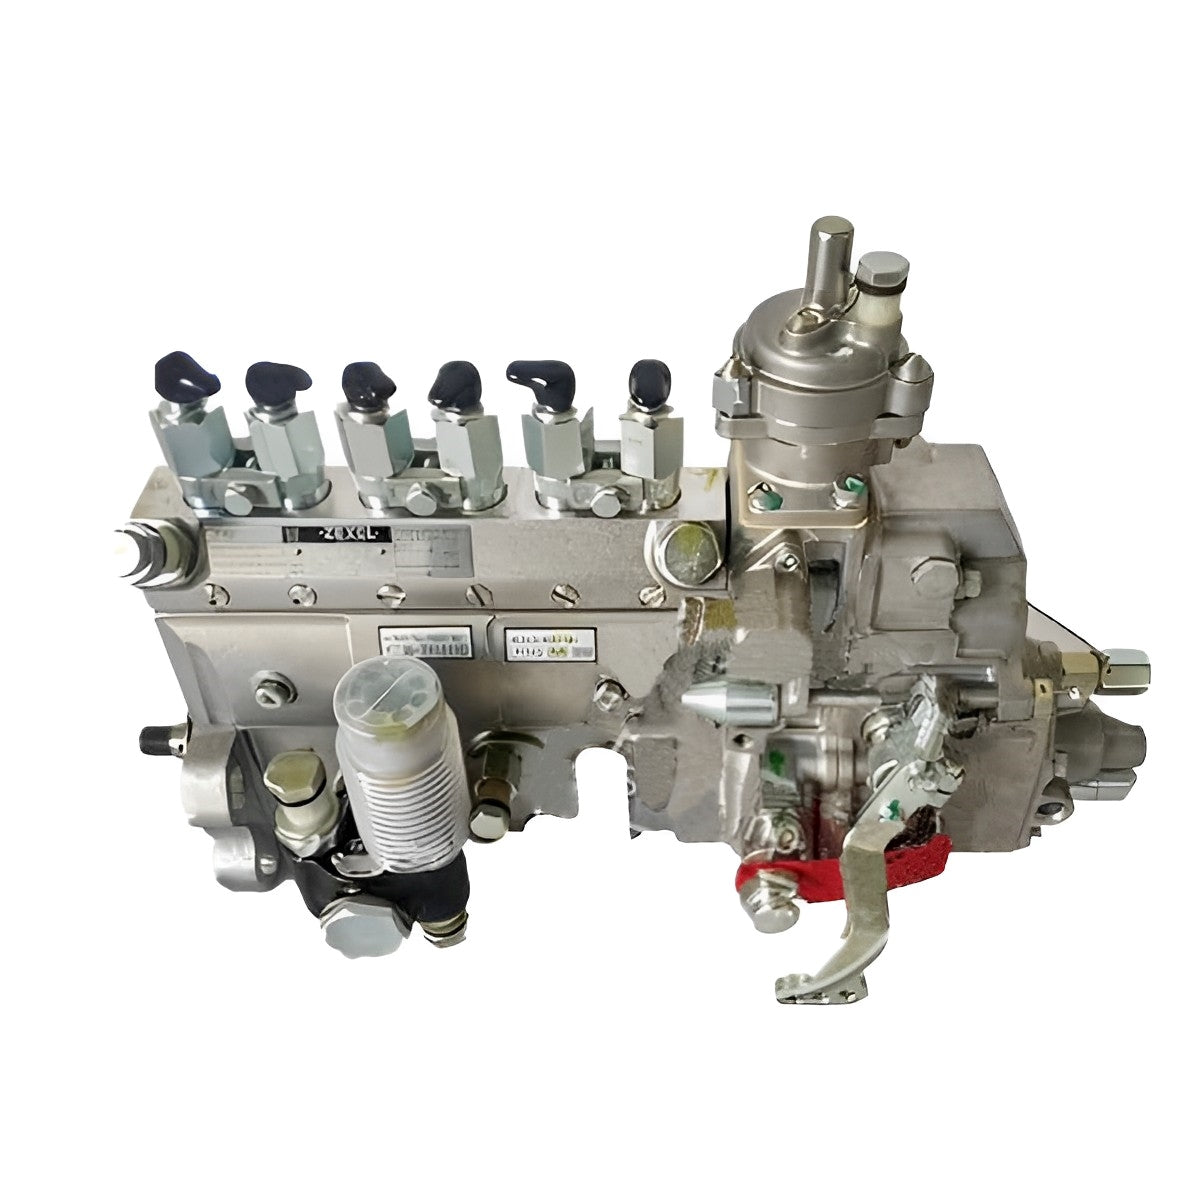 6738-71-1110 Fuel Injection Pump for Komatsu PC200-7 PC210-7 Excavator - Sinocmp